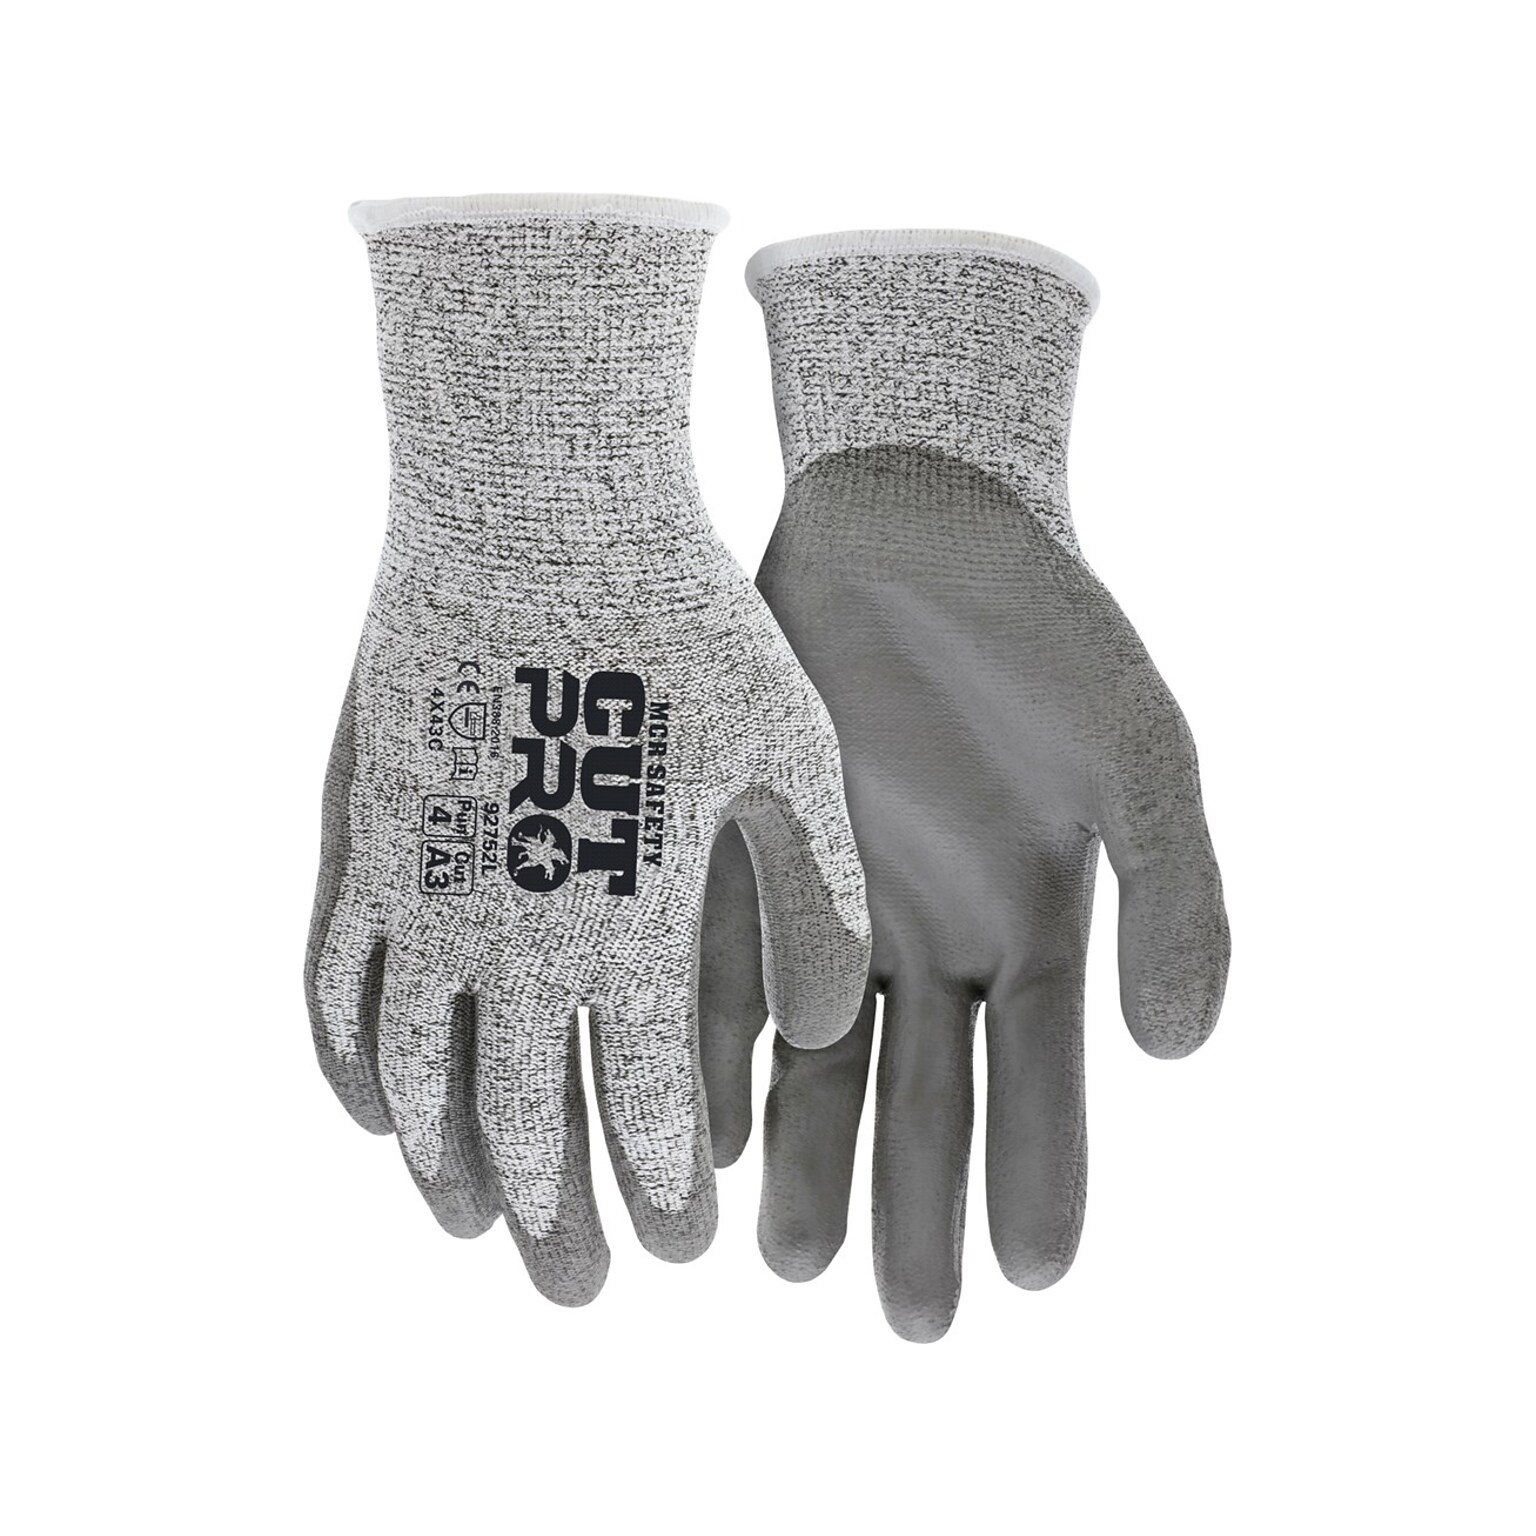 MCR Safety Cut Pro Hypermax Fiber/Polyurethane Work Gloves, XXL, A3 Cut Level, Salt-and-Pepper/Gray, Dozen (92752XXL)